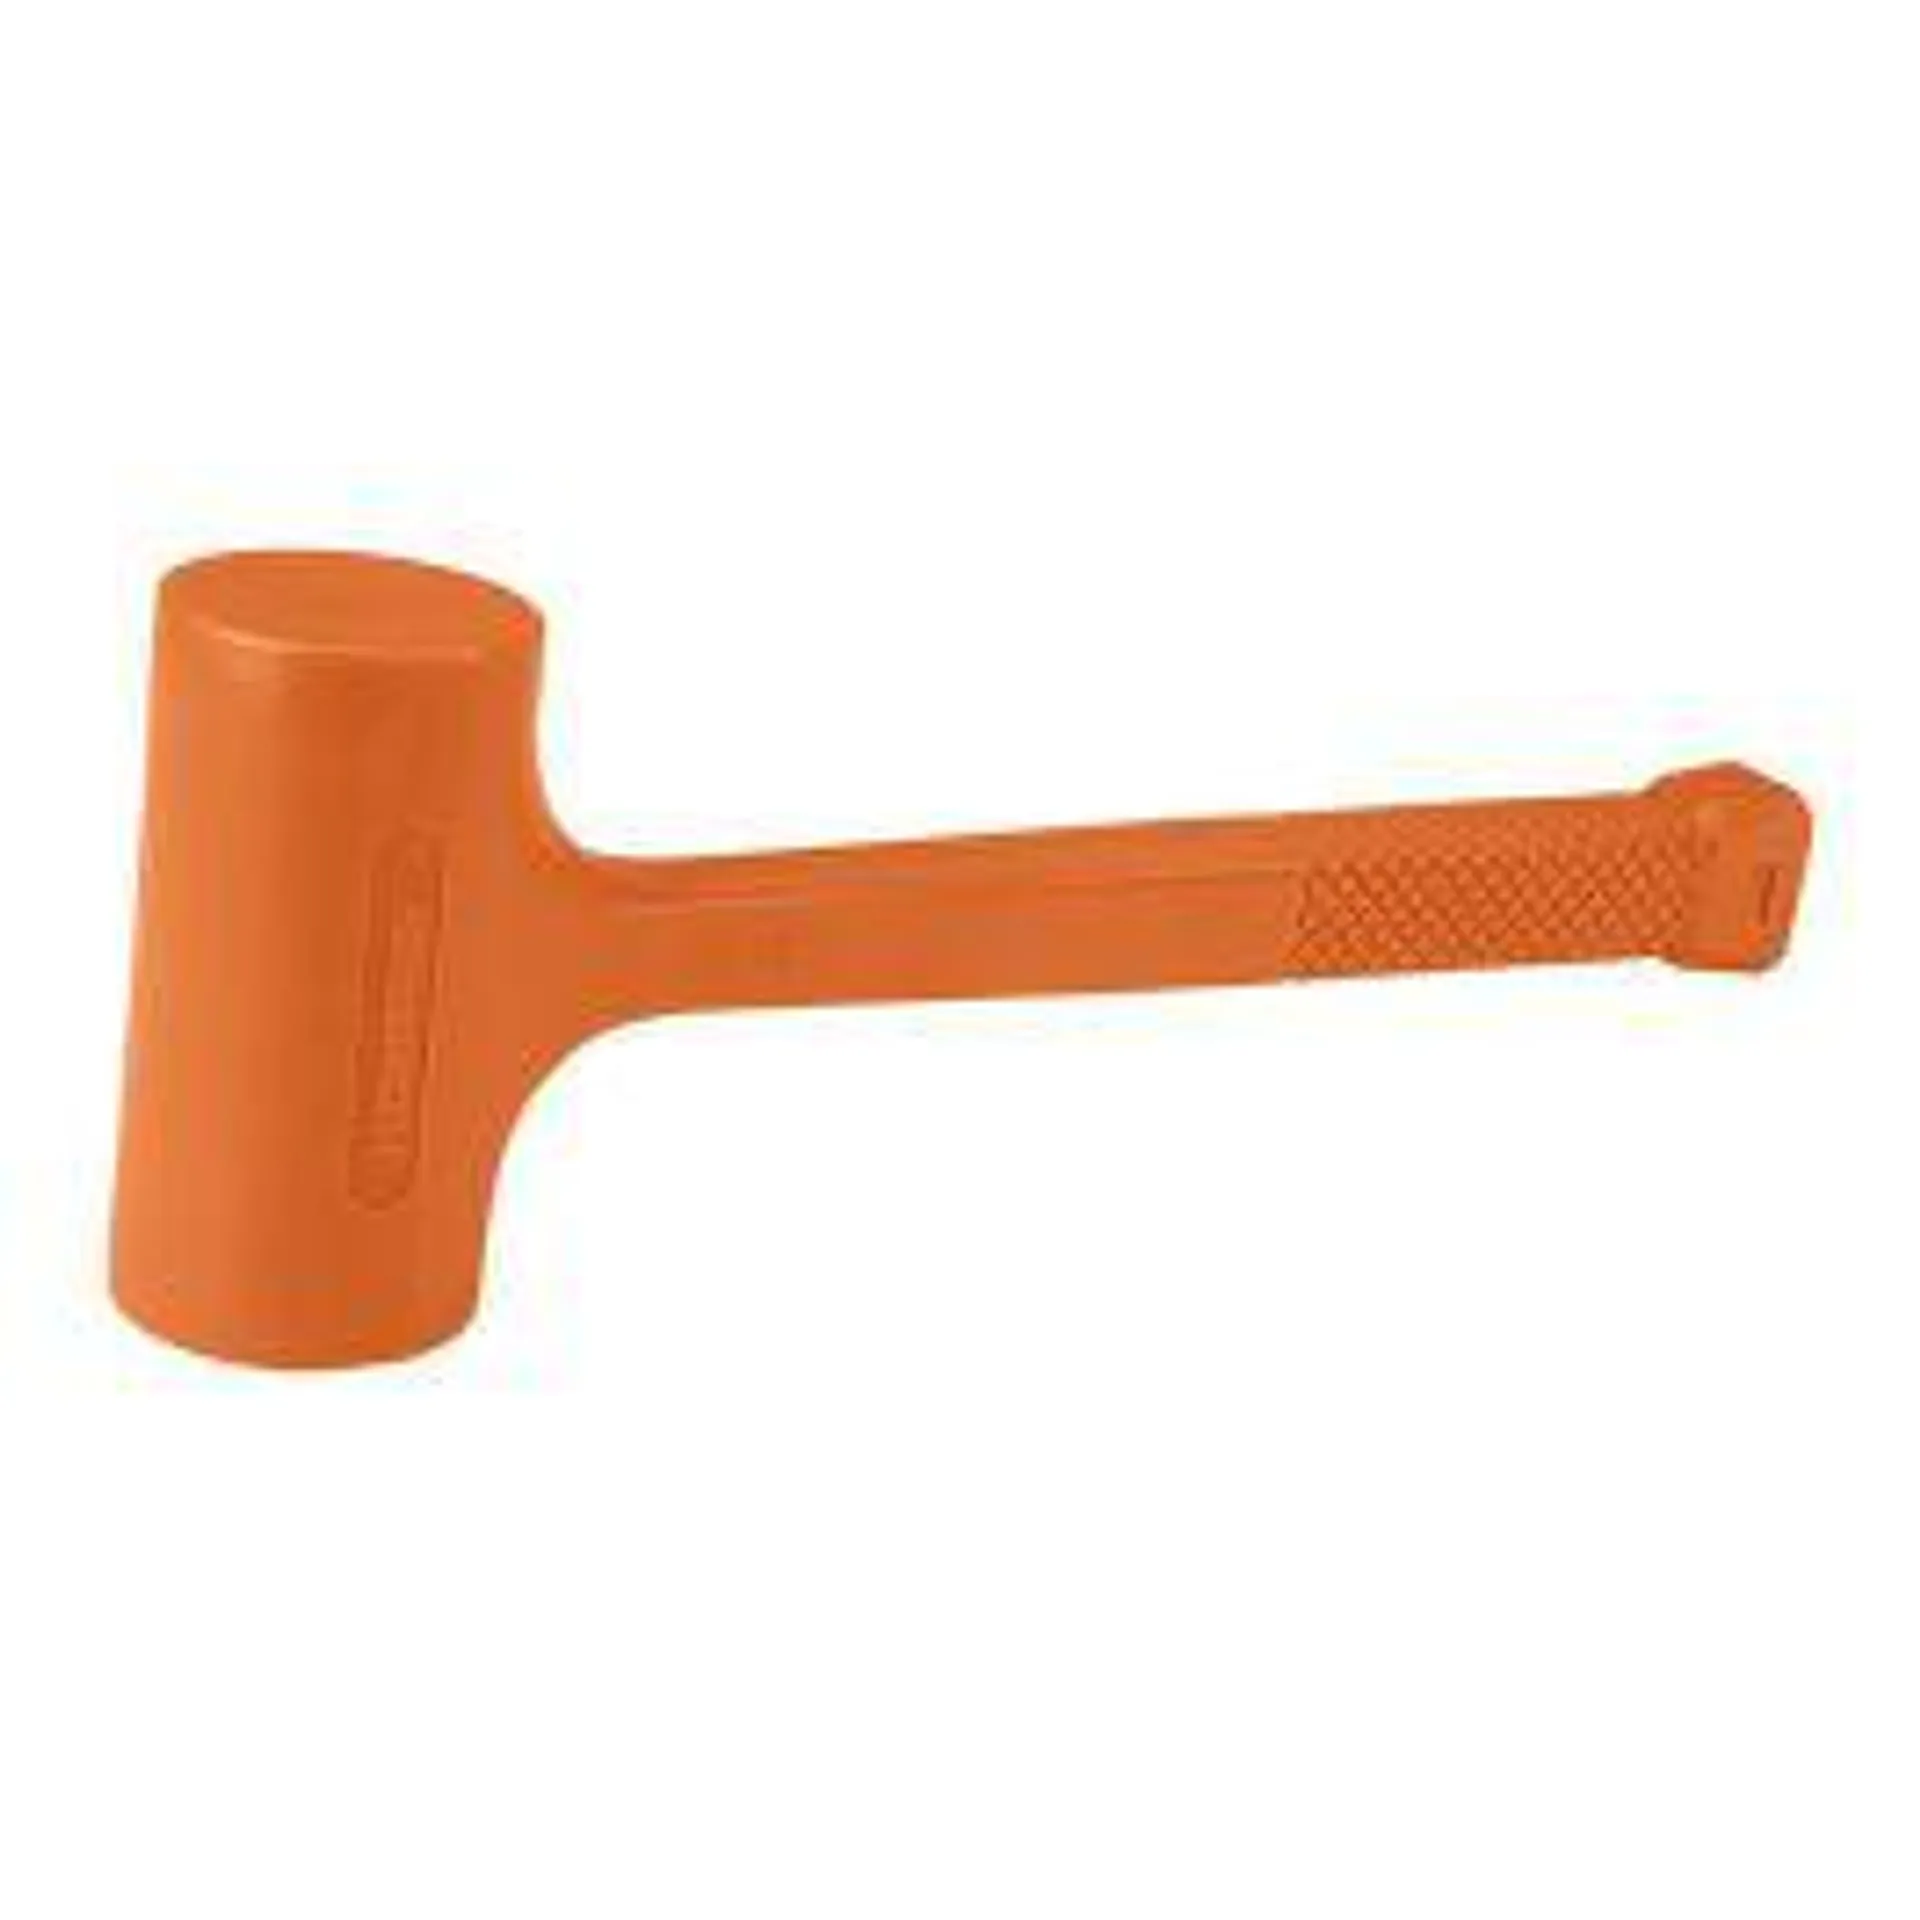 4 lb. Neon Orange Dead Blow Hammer